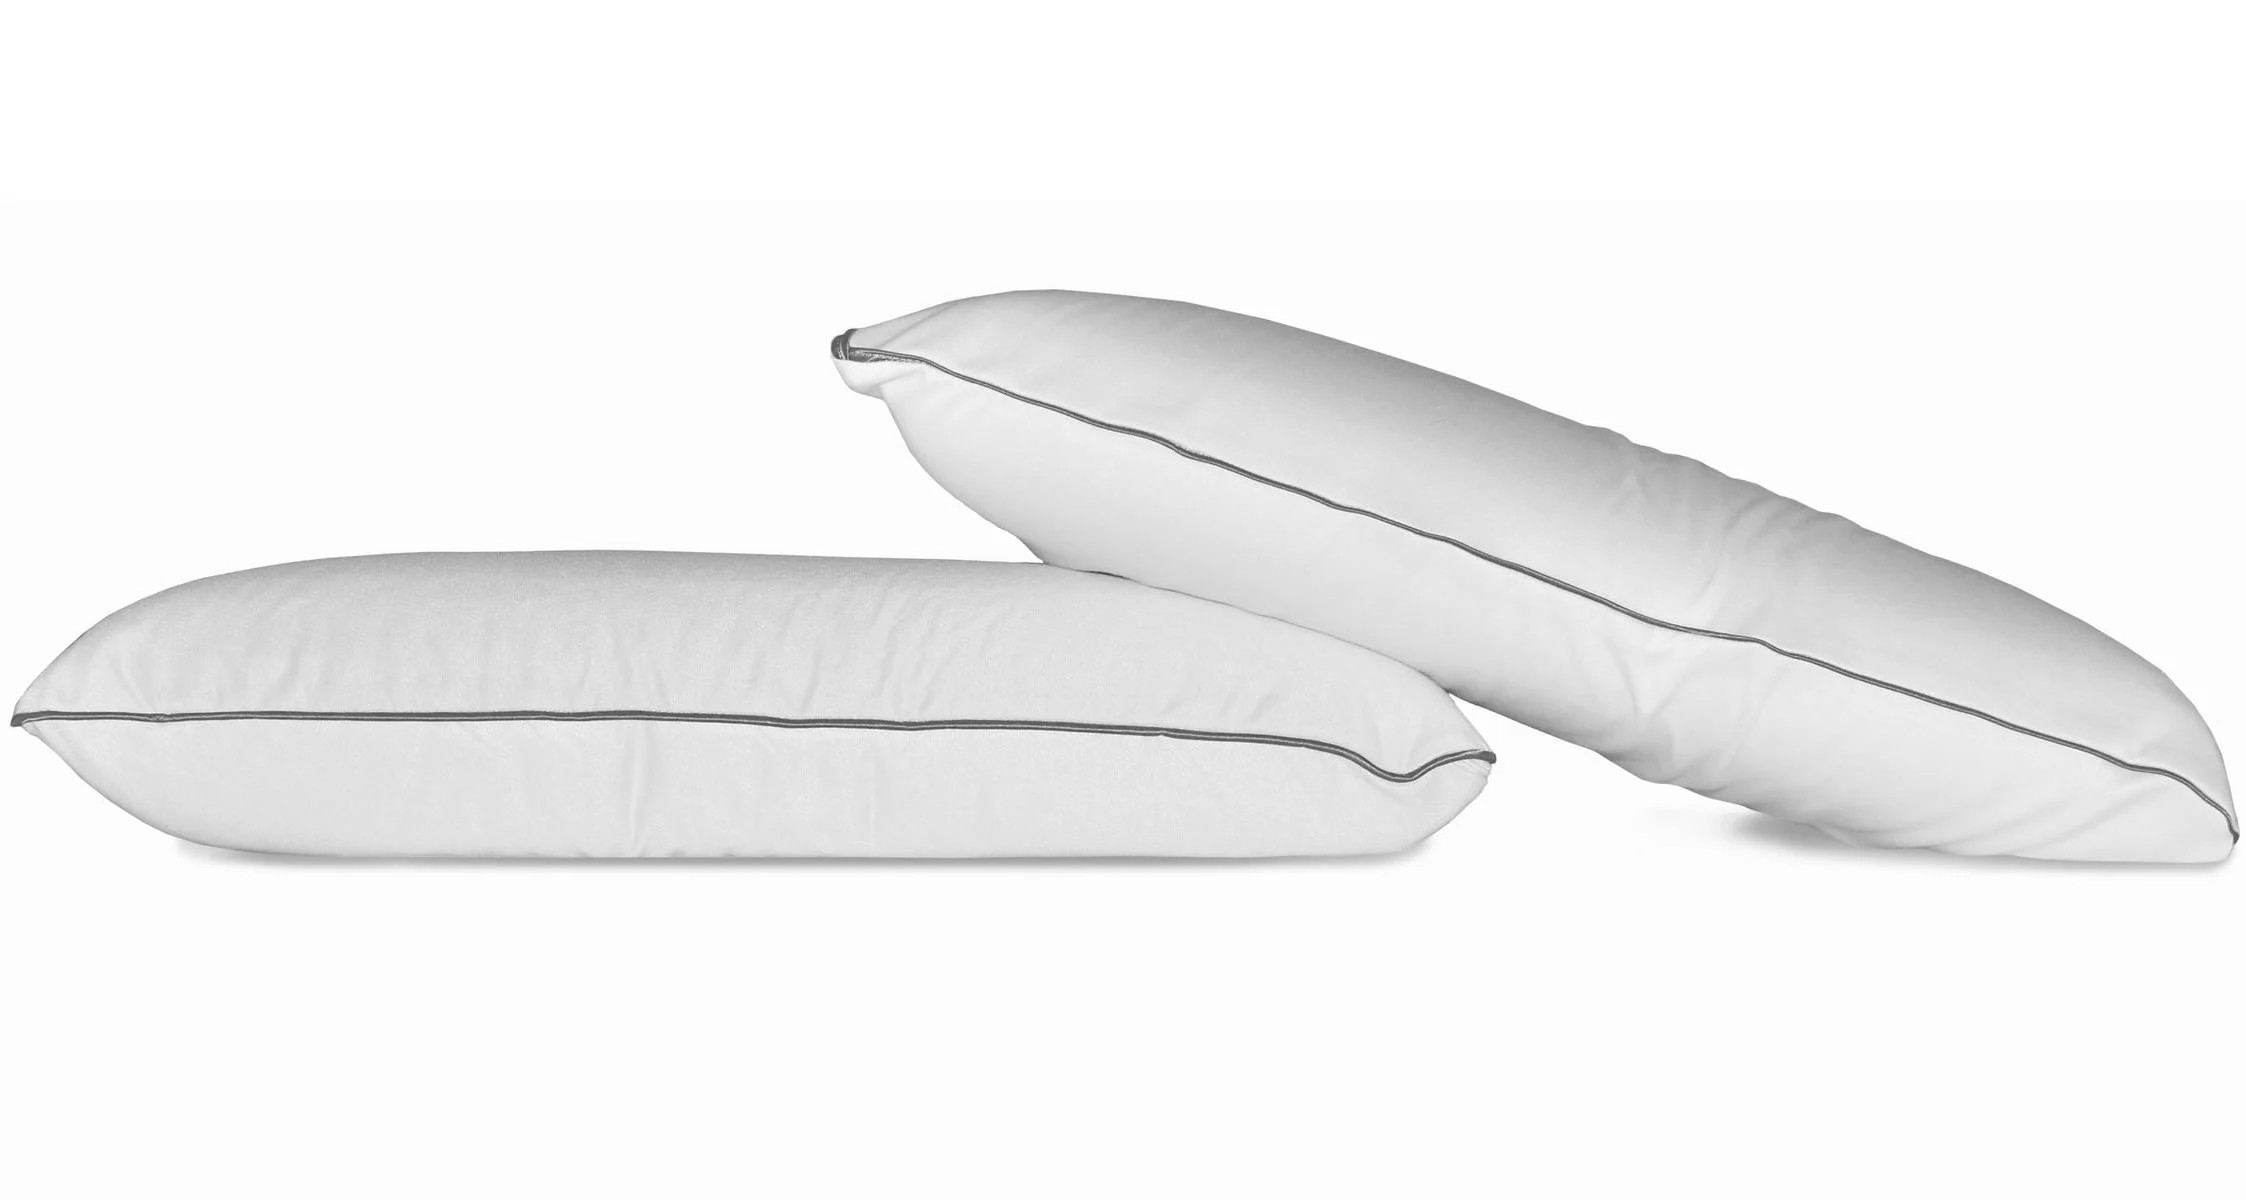 Almohada látex Confort micro-alvéolos firmeza media-alta - 105 cm